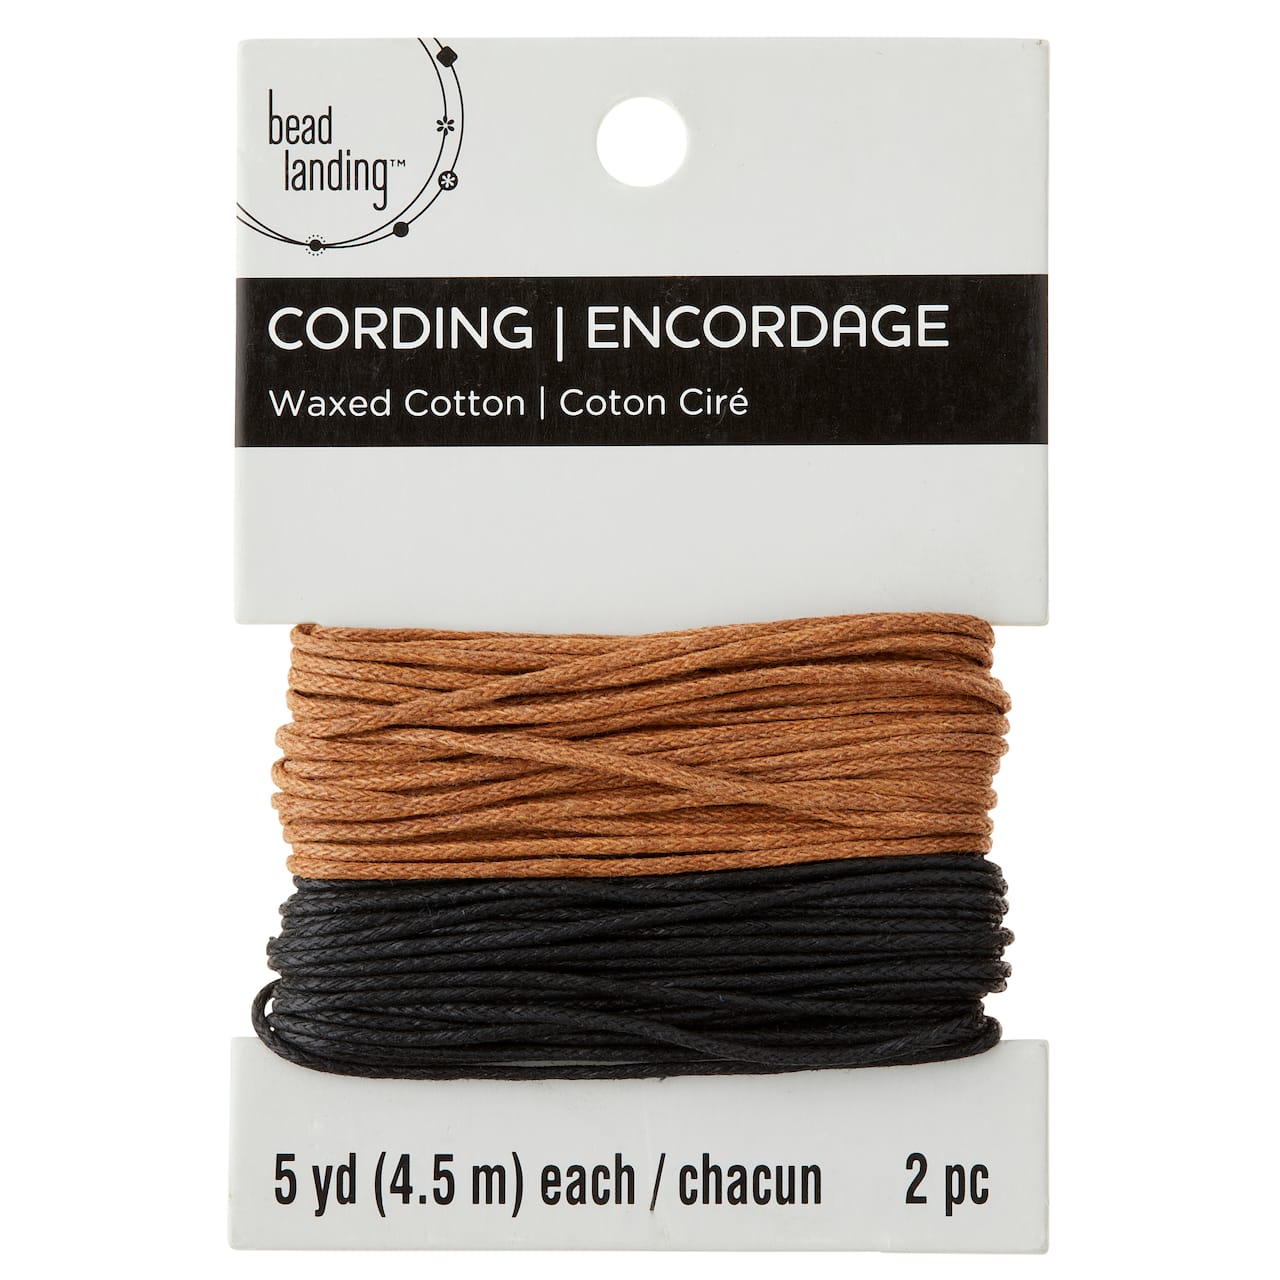 Black &#x26; Brown Waxed Cotton Cording by Bead Landing&#x2122;